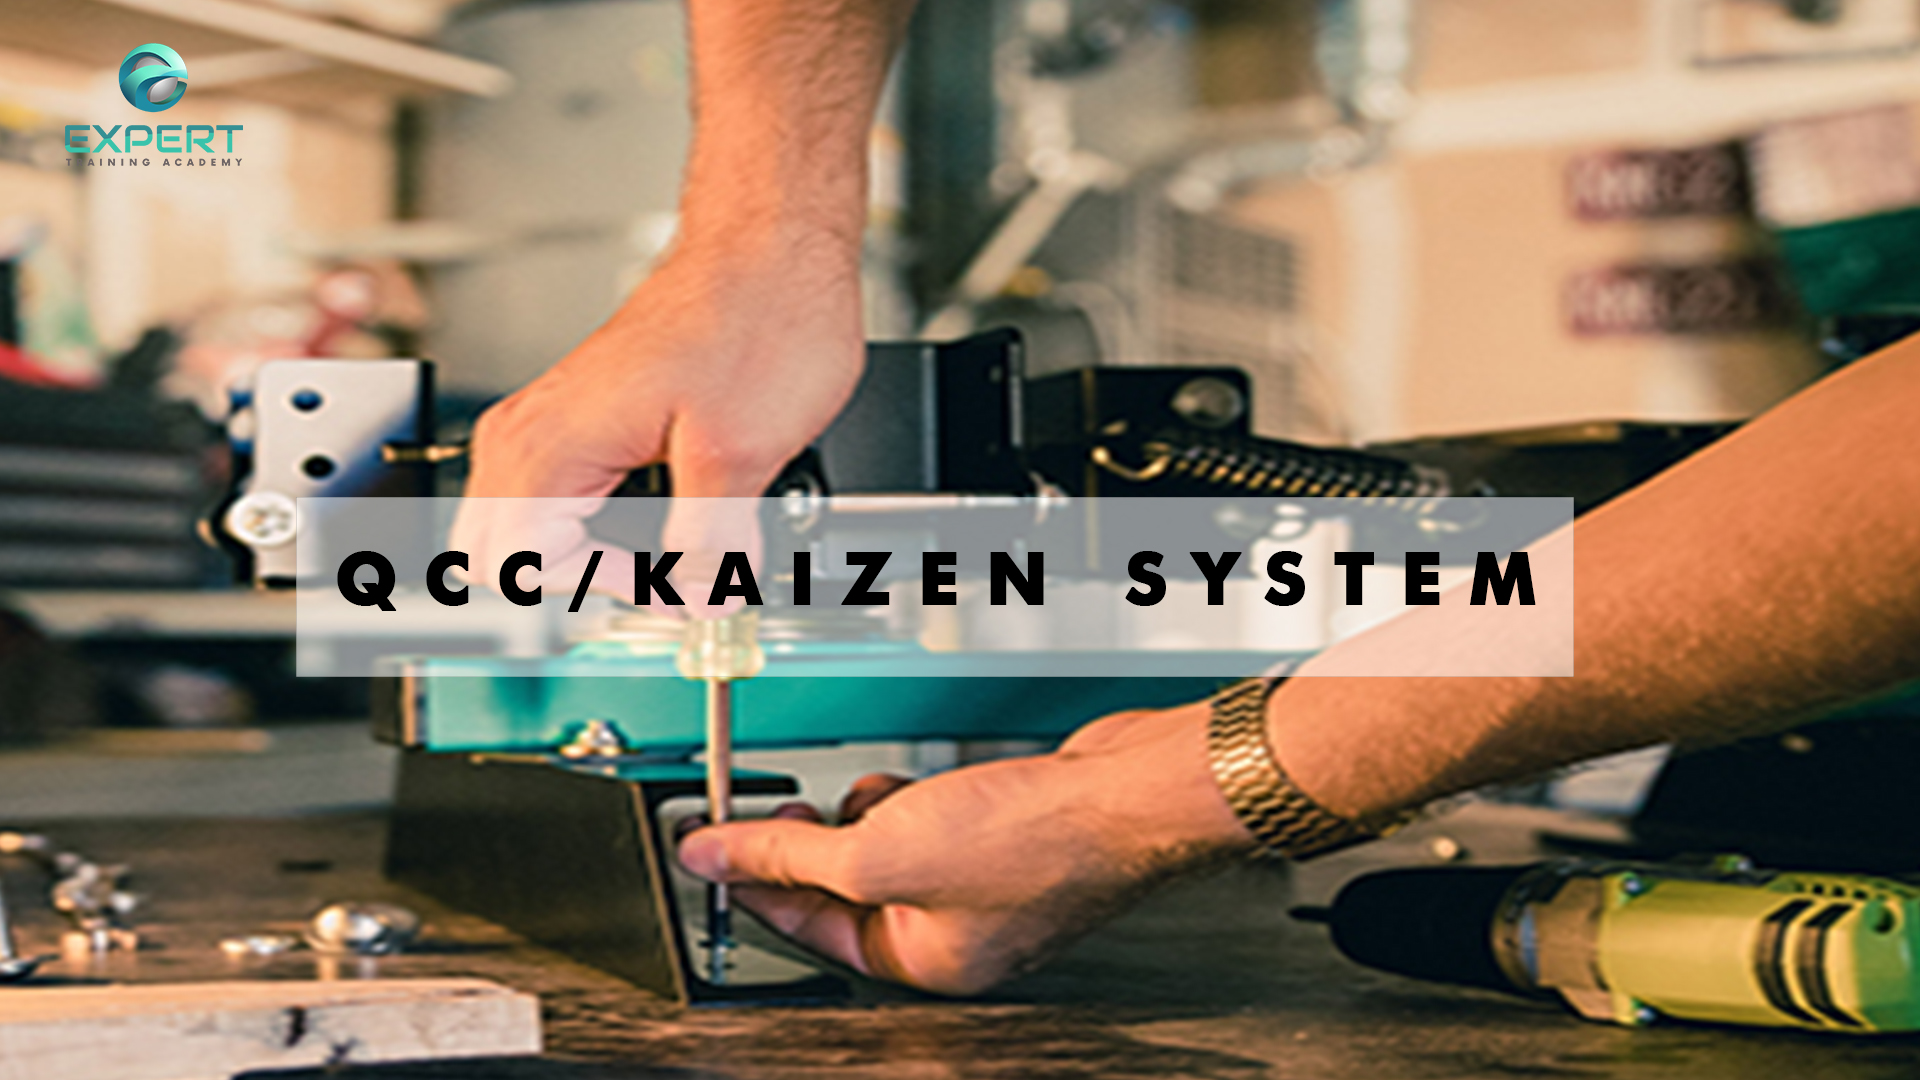 QCC / Kaizen System